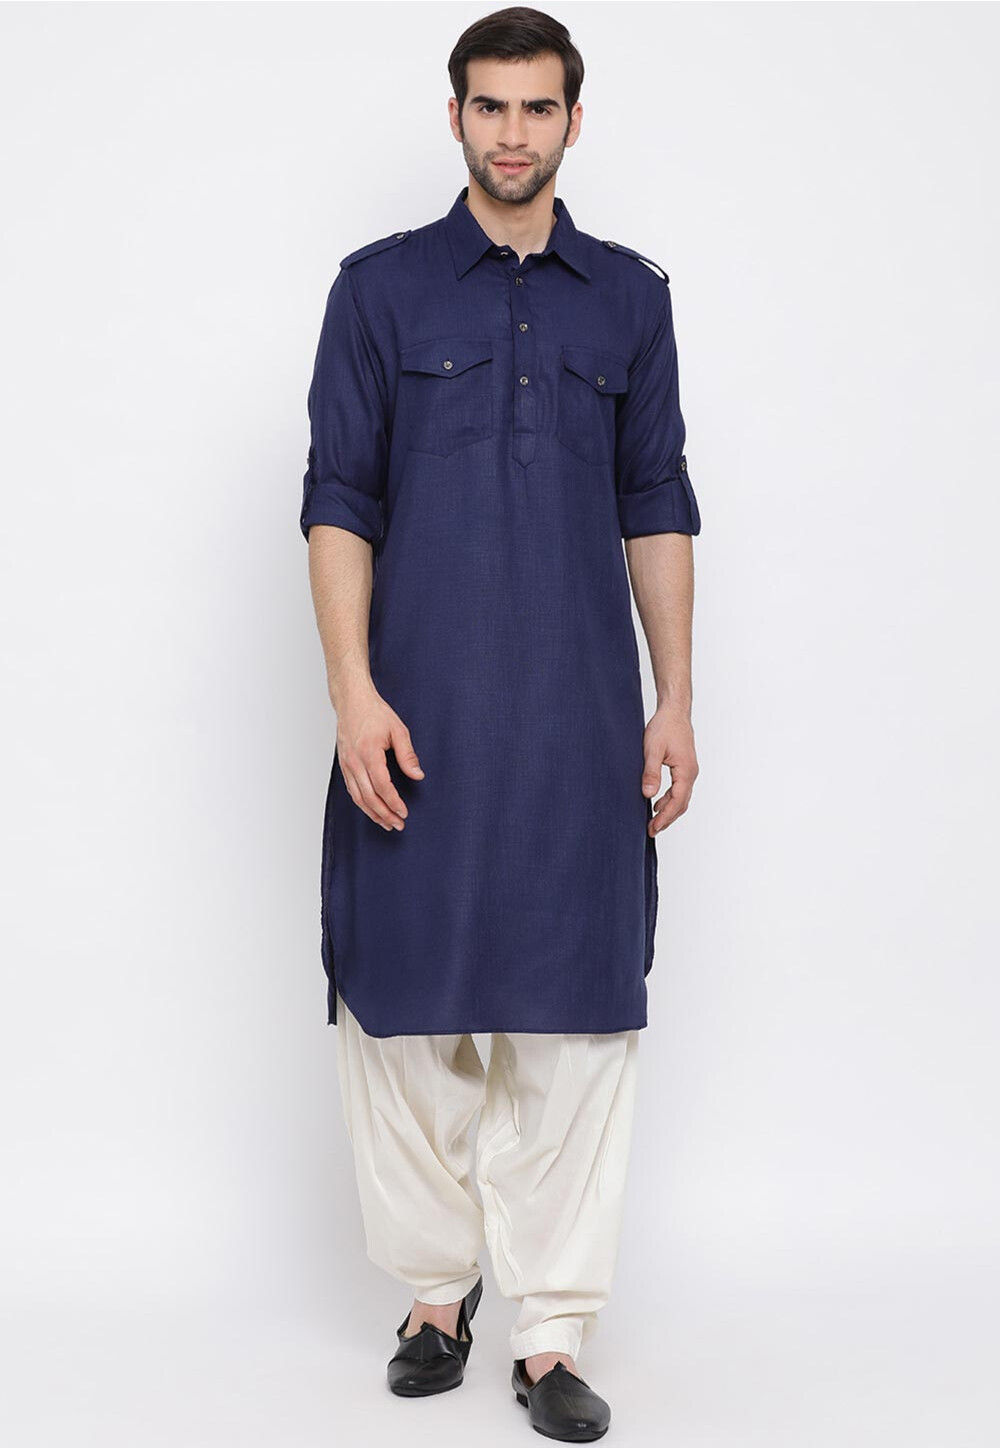 Muneer Khan on LinkedIn: Indian Wedding Party Wear Comfortable Dress for  Men Ethnic Wear Pathani…